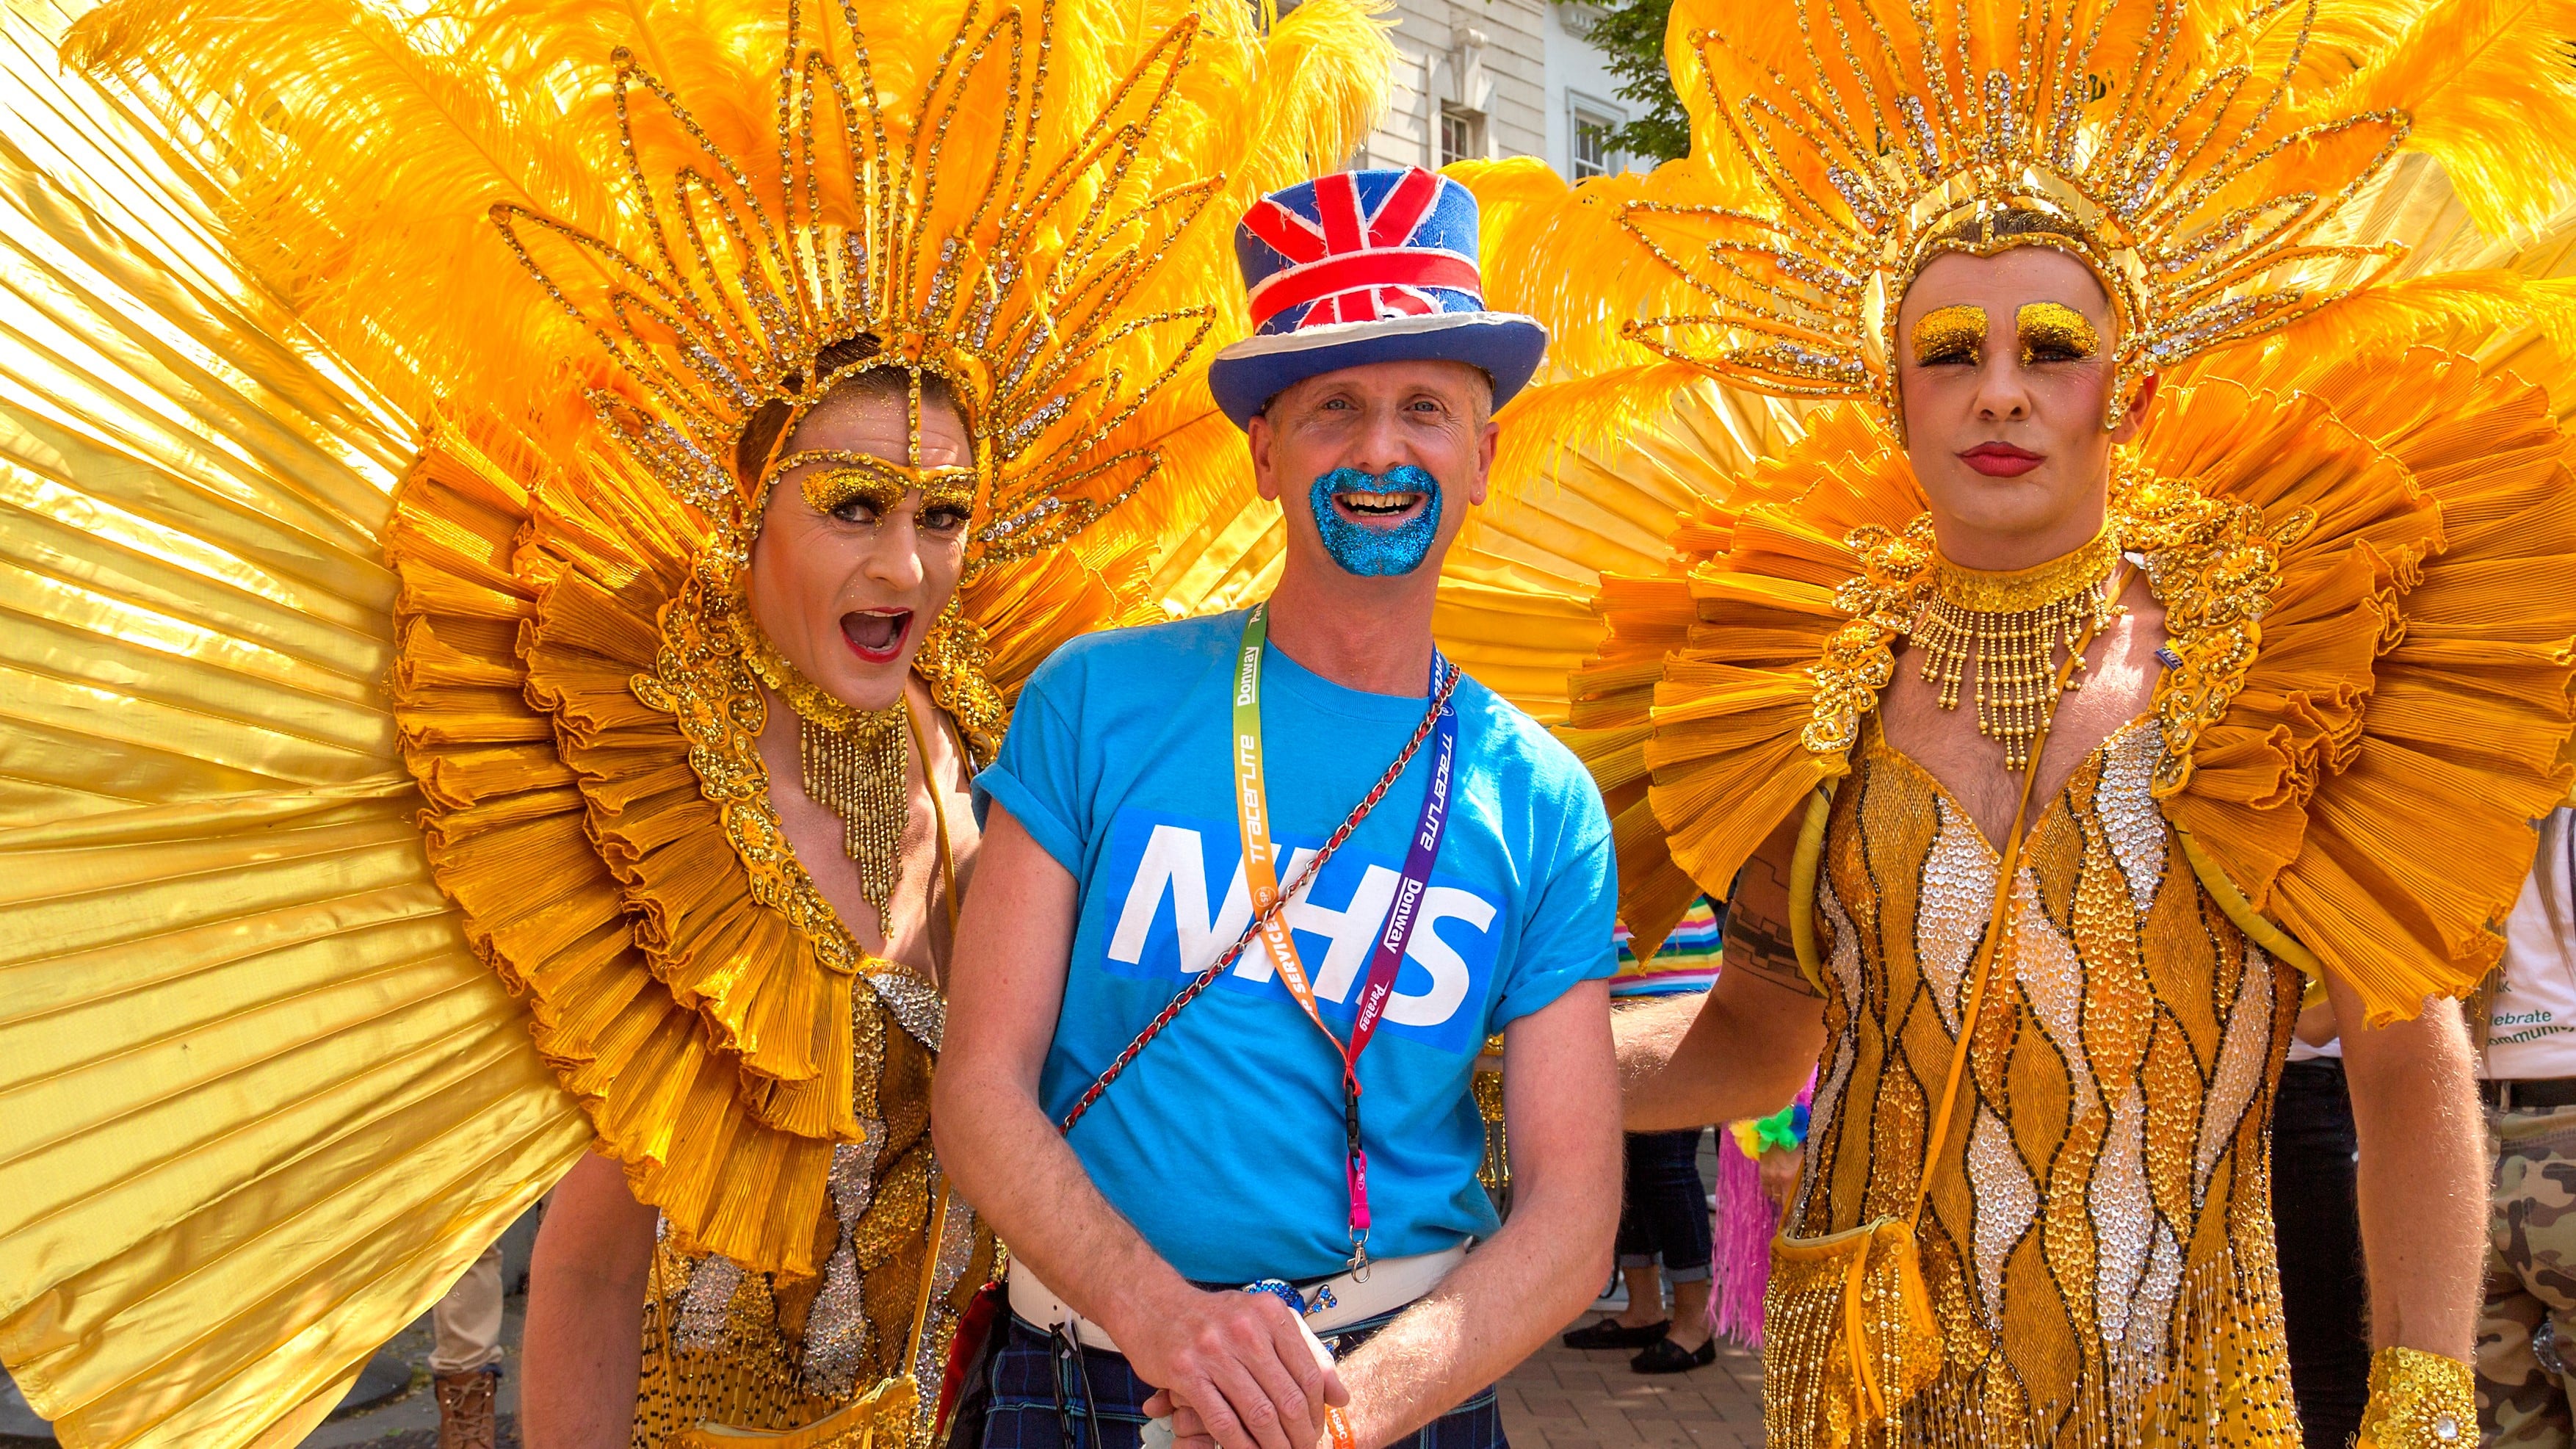 Revellers wearing vibrant bright yellow costumes meet up before the Birmingham Pride parade through Birmingham City centre.